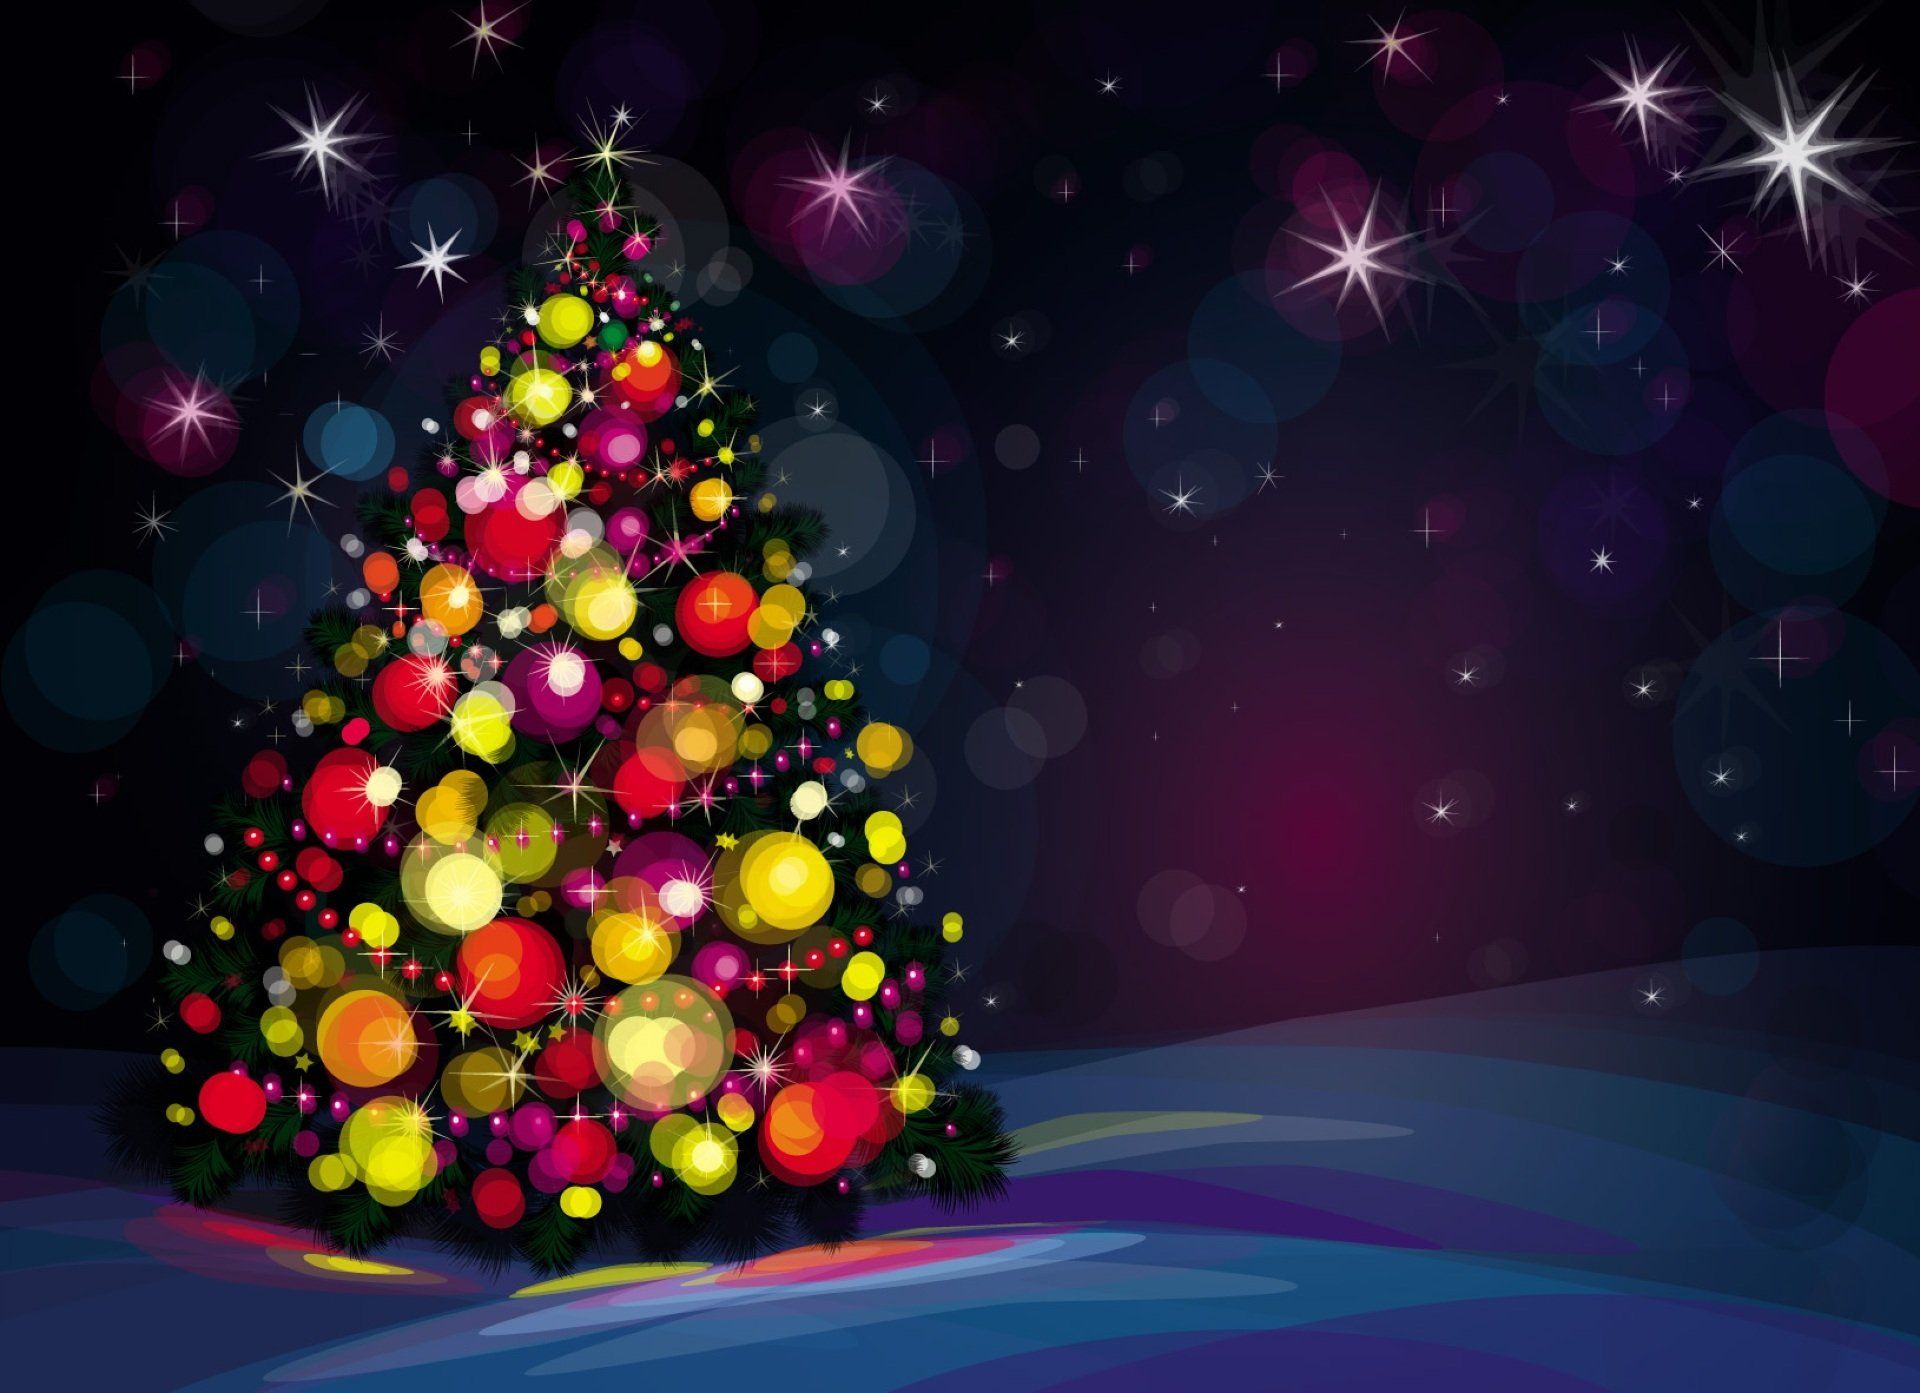 Beautiful Christmas Tree Wallpaper 10 Christmas Image 2018 Wallpaper & Background Download